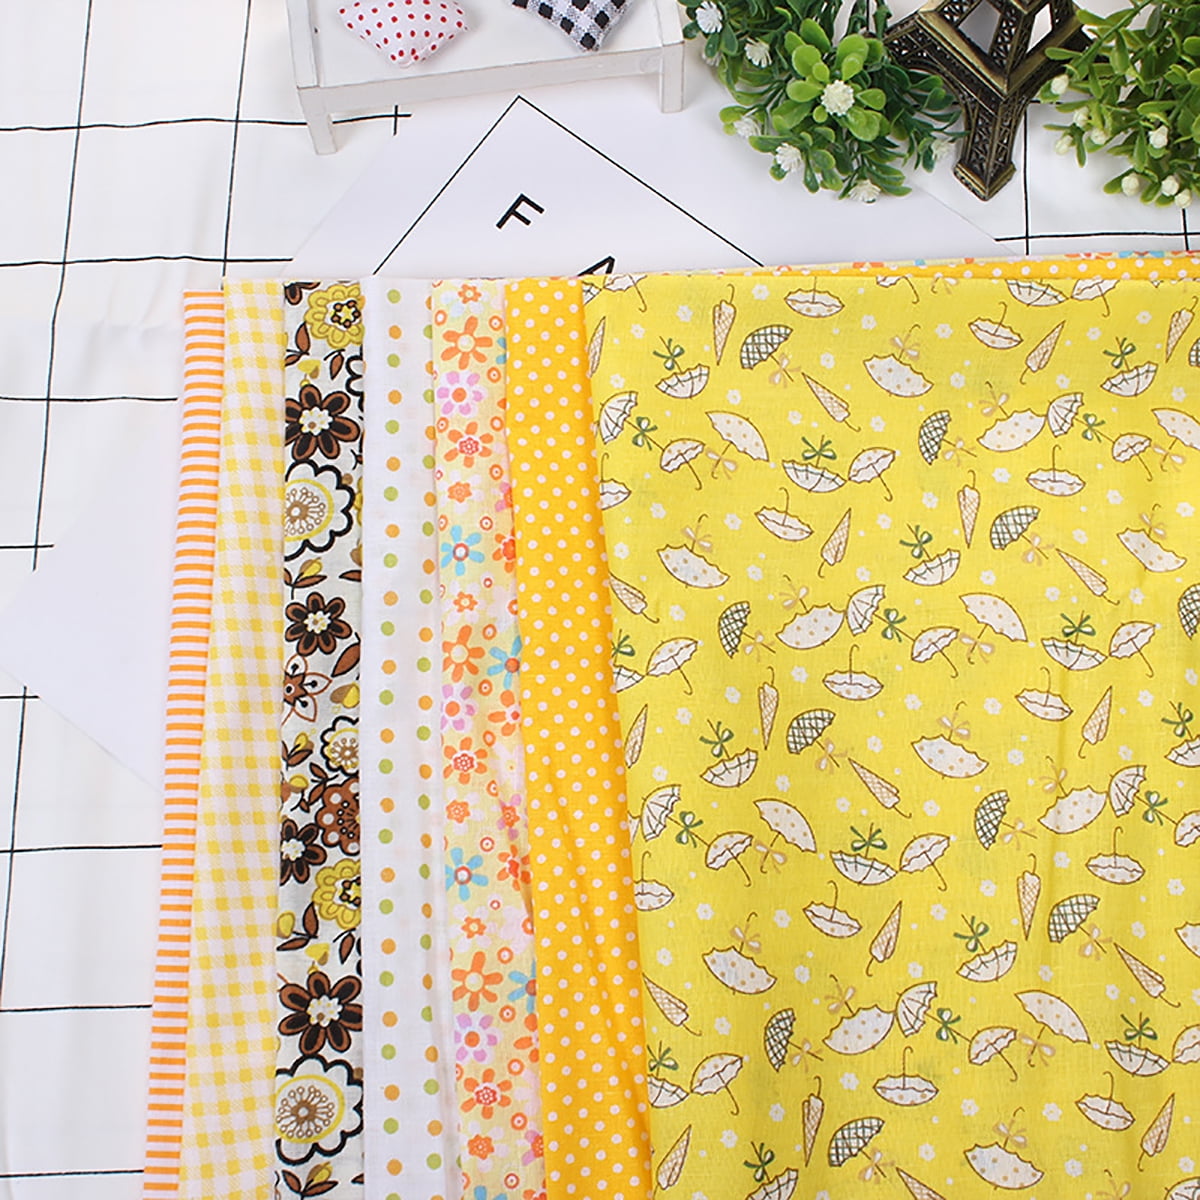 DIY Craft Quilting 7pcs 50x50cm Patchwork Cotton Fabric Squares Bundles Remnants for Sewing Handicraft